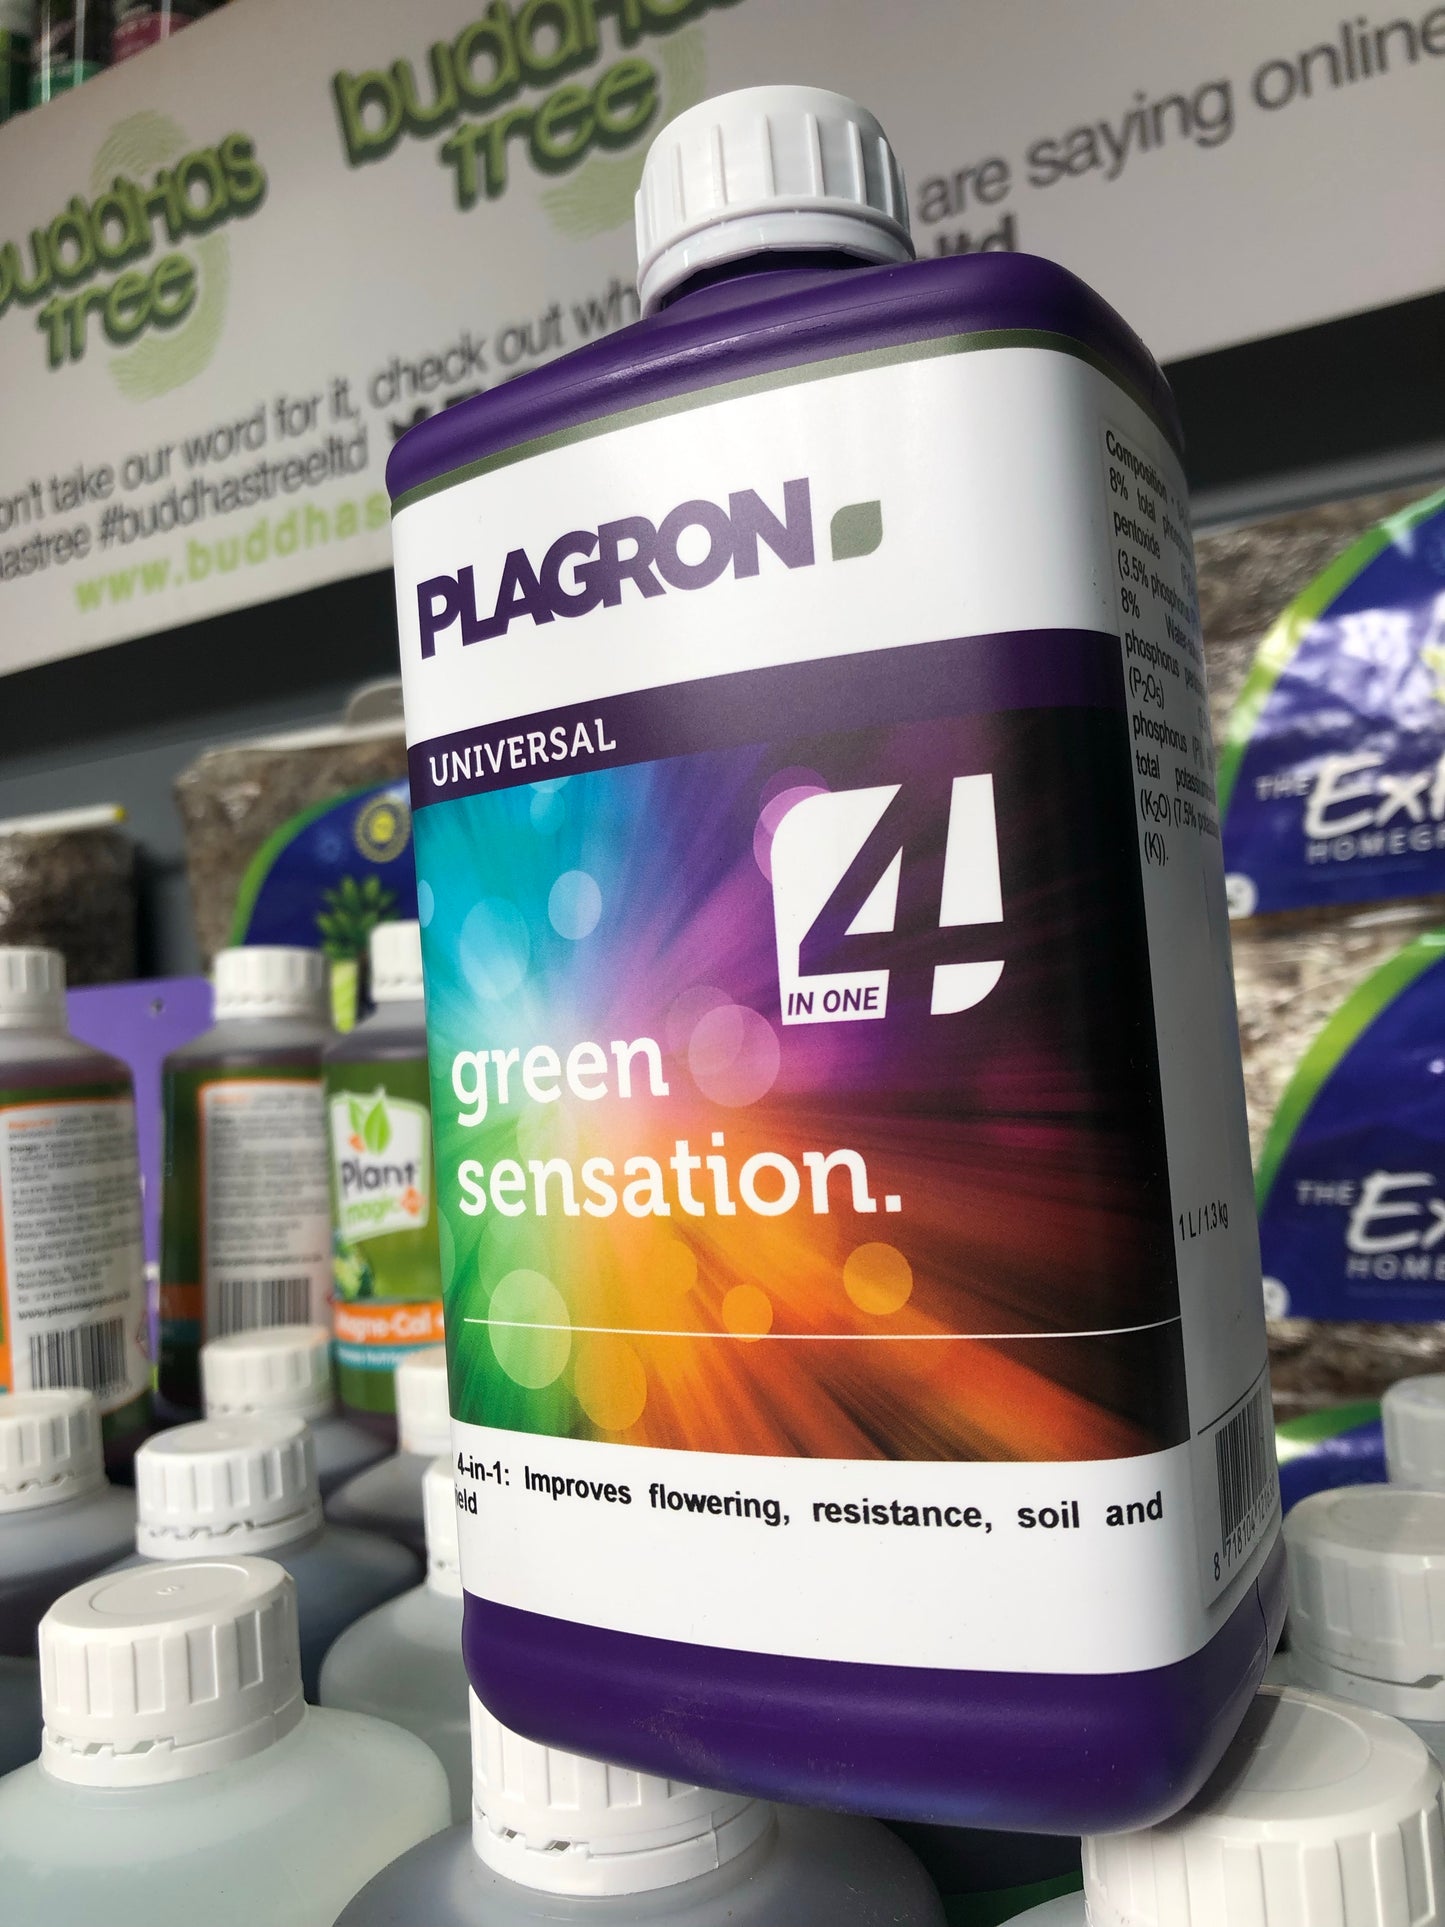 Green sensation - Plagron